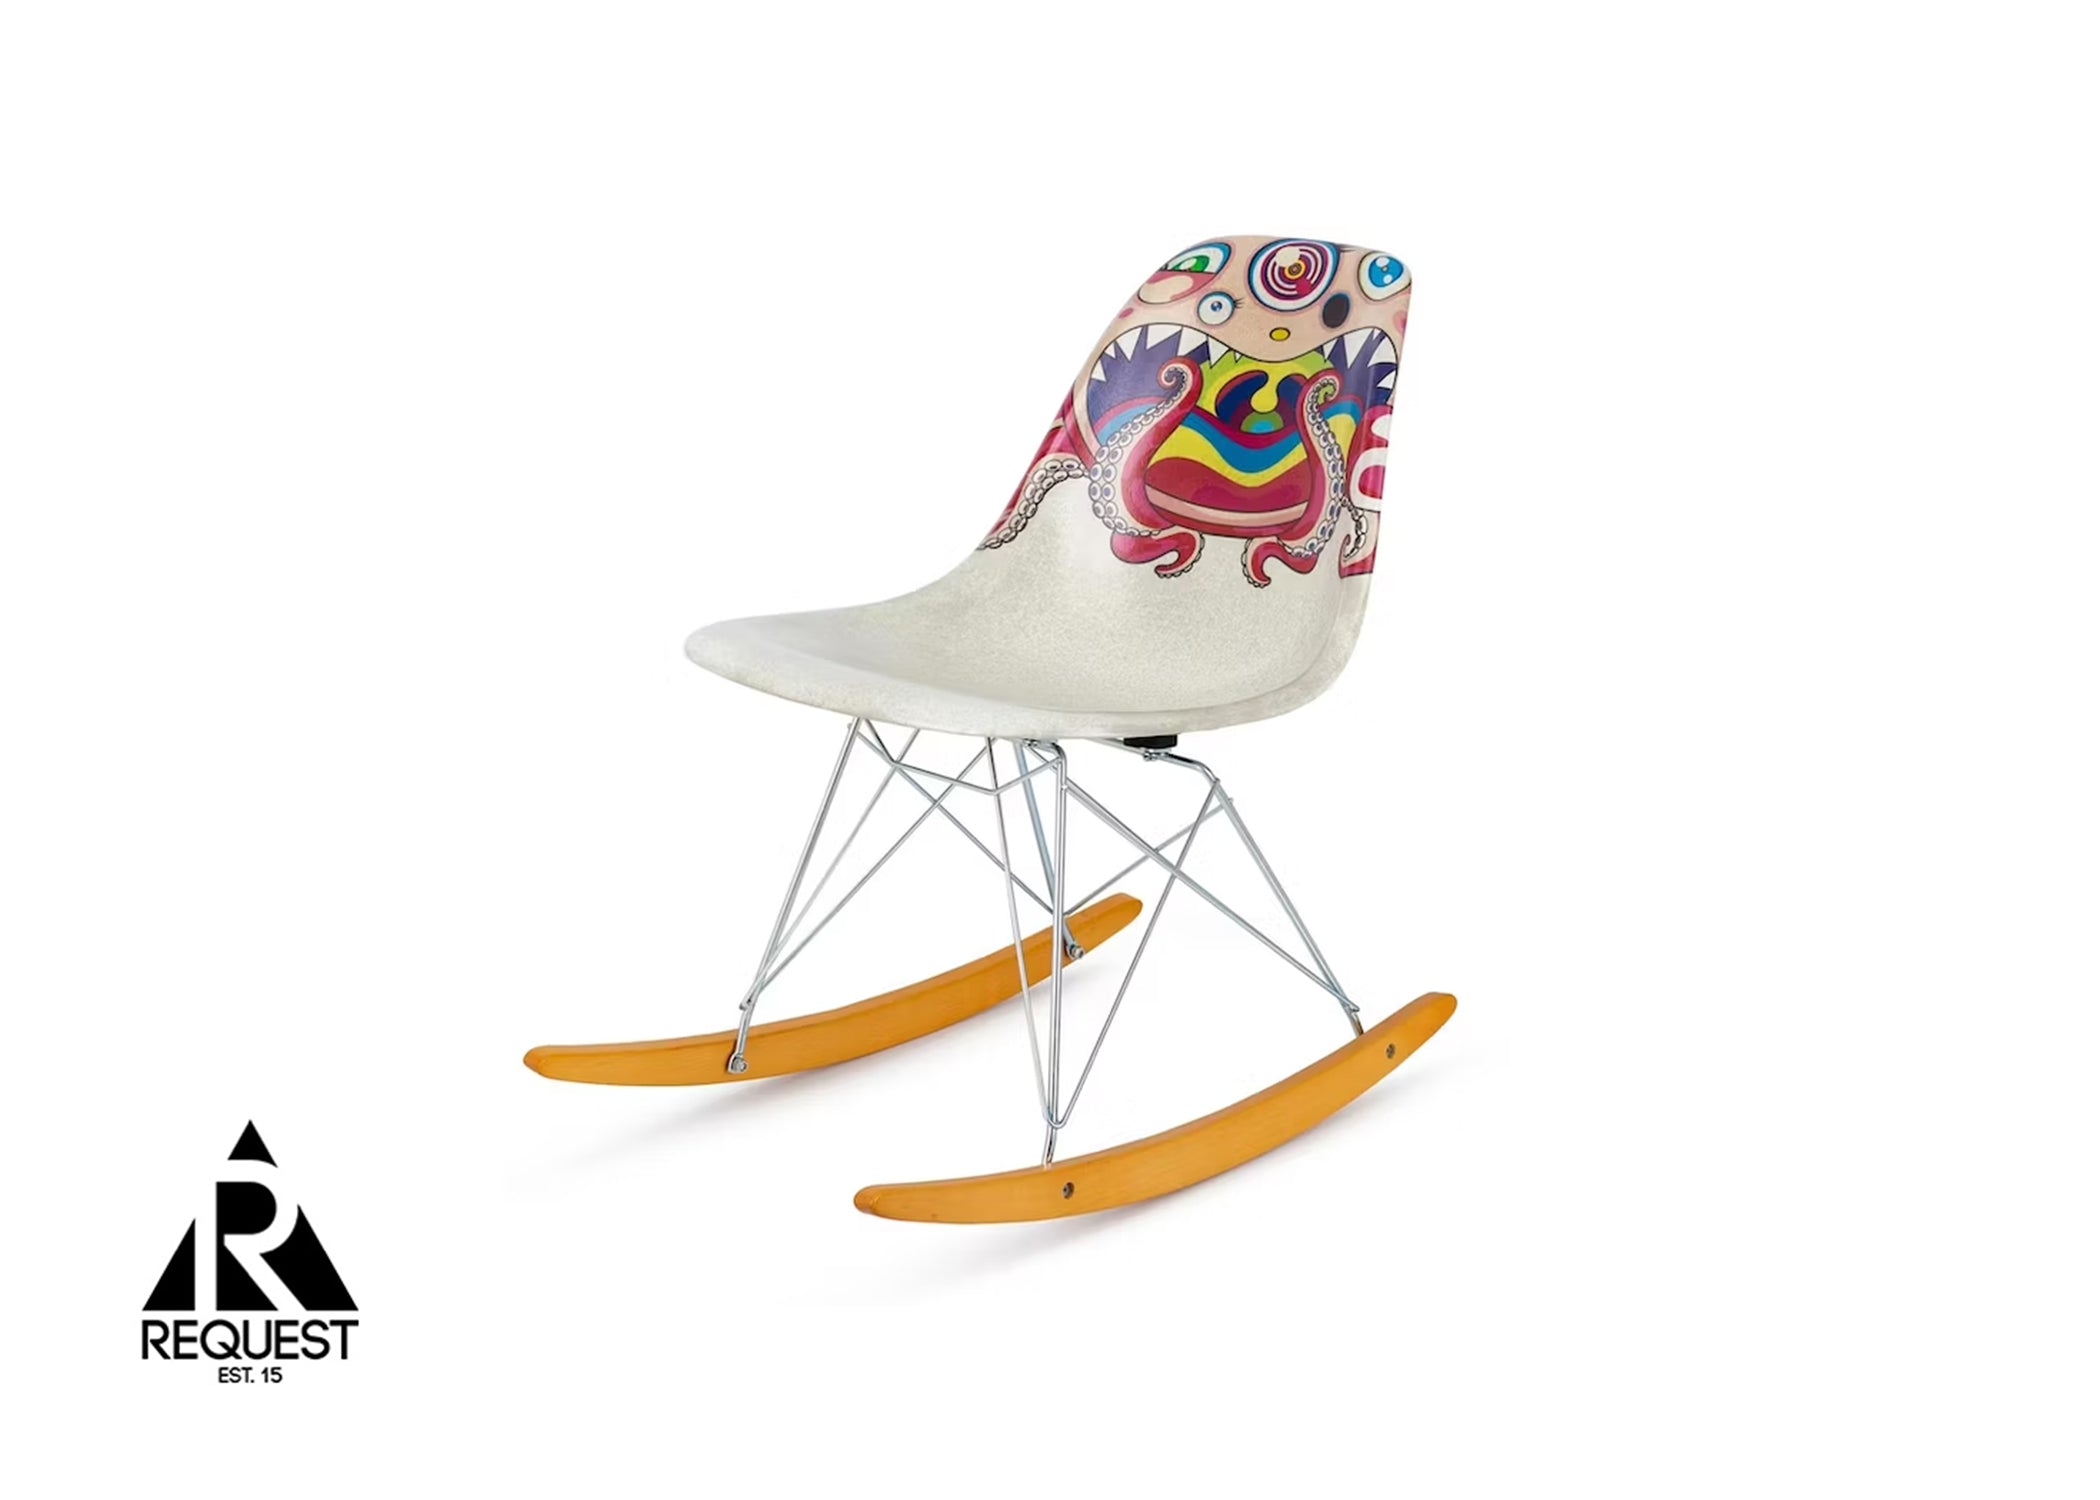 Takashi Murakami x Complexcon x Modernica Dobtopus Rocking Chair